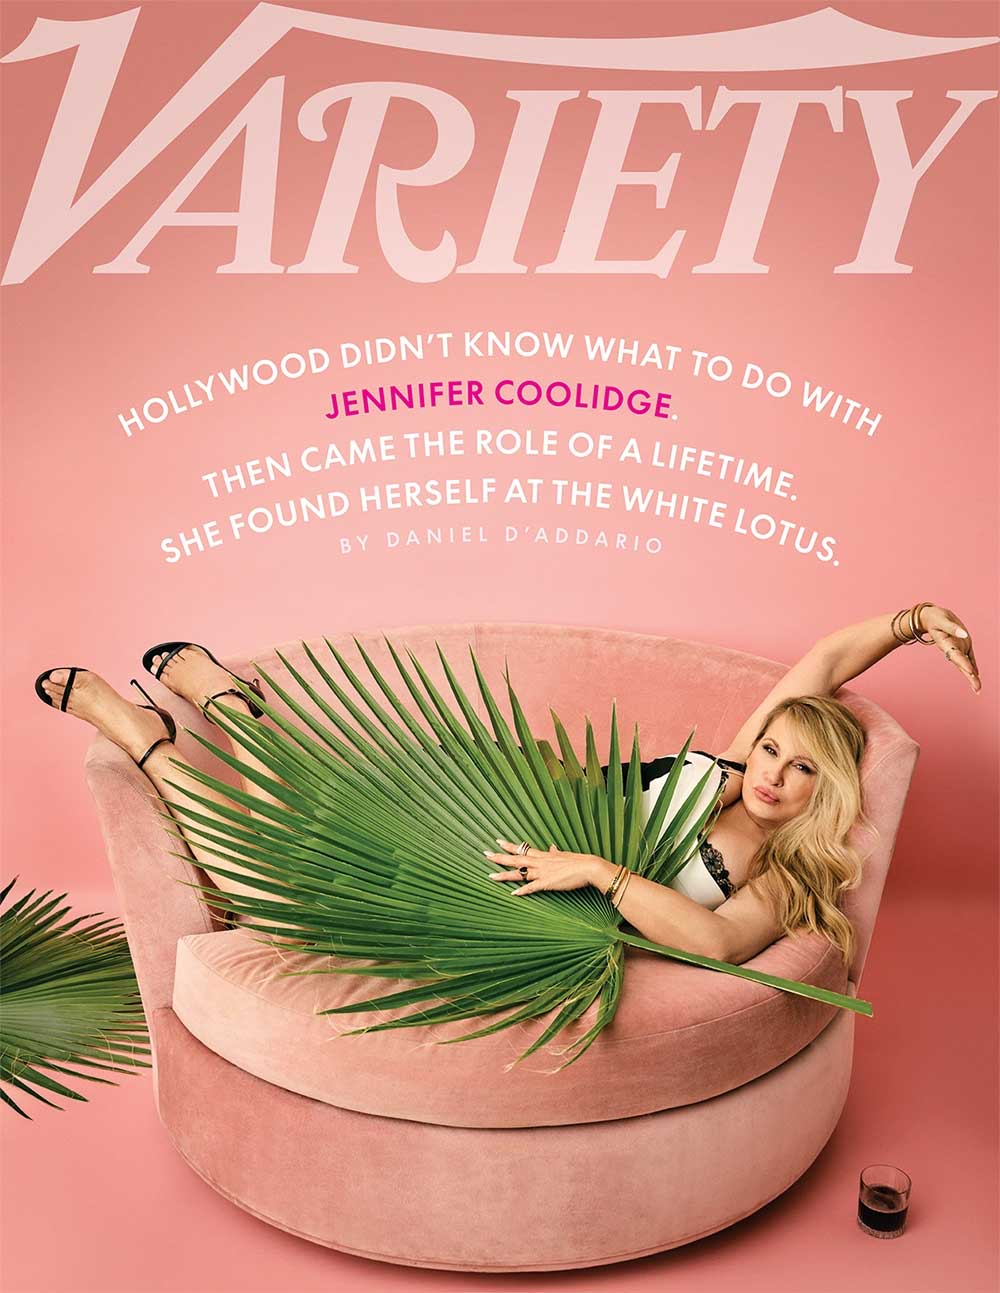 Jennifer-Coolidge-Variety-Cover-1000